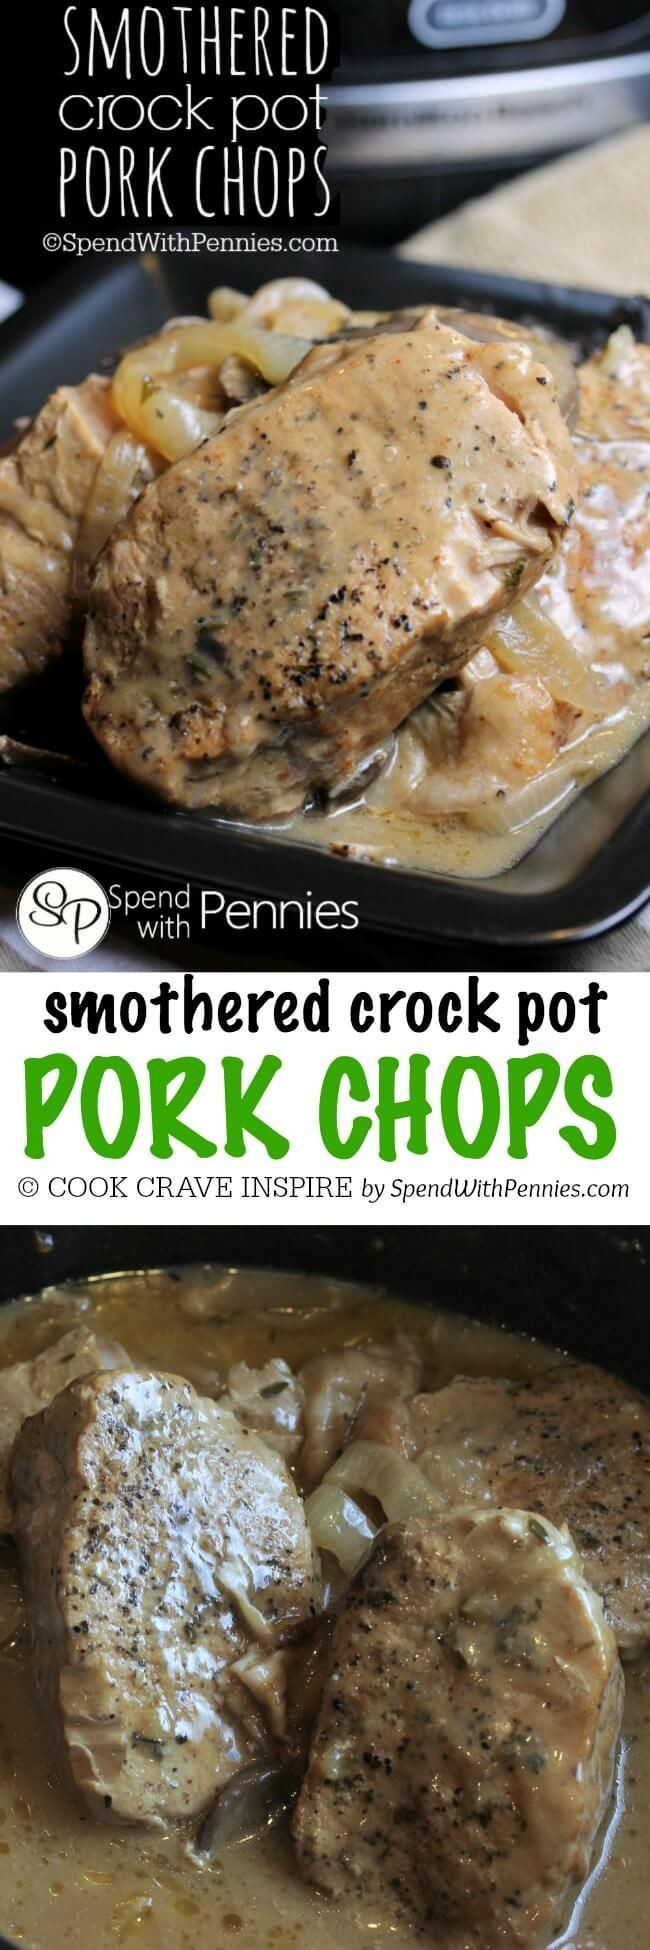 Pork Chops In The Crock Pot
 Smothered Crock Pot Pork Chops Recipe